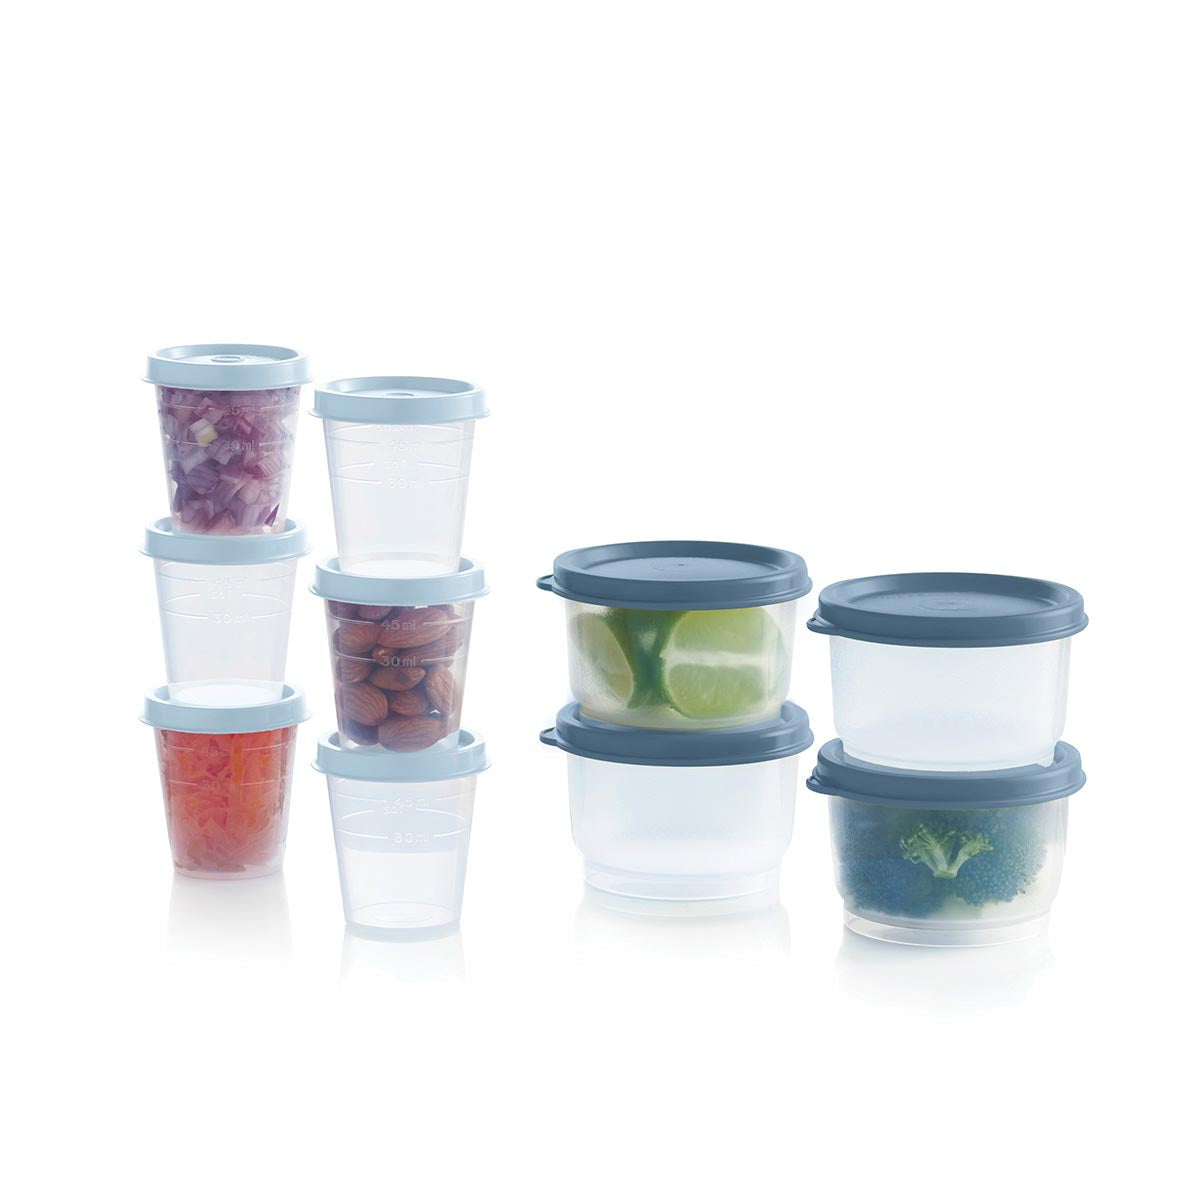  Tupperware Brand Ideal Lit'l Food Storage Bowls for